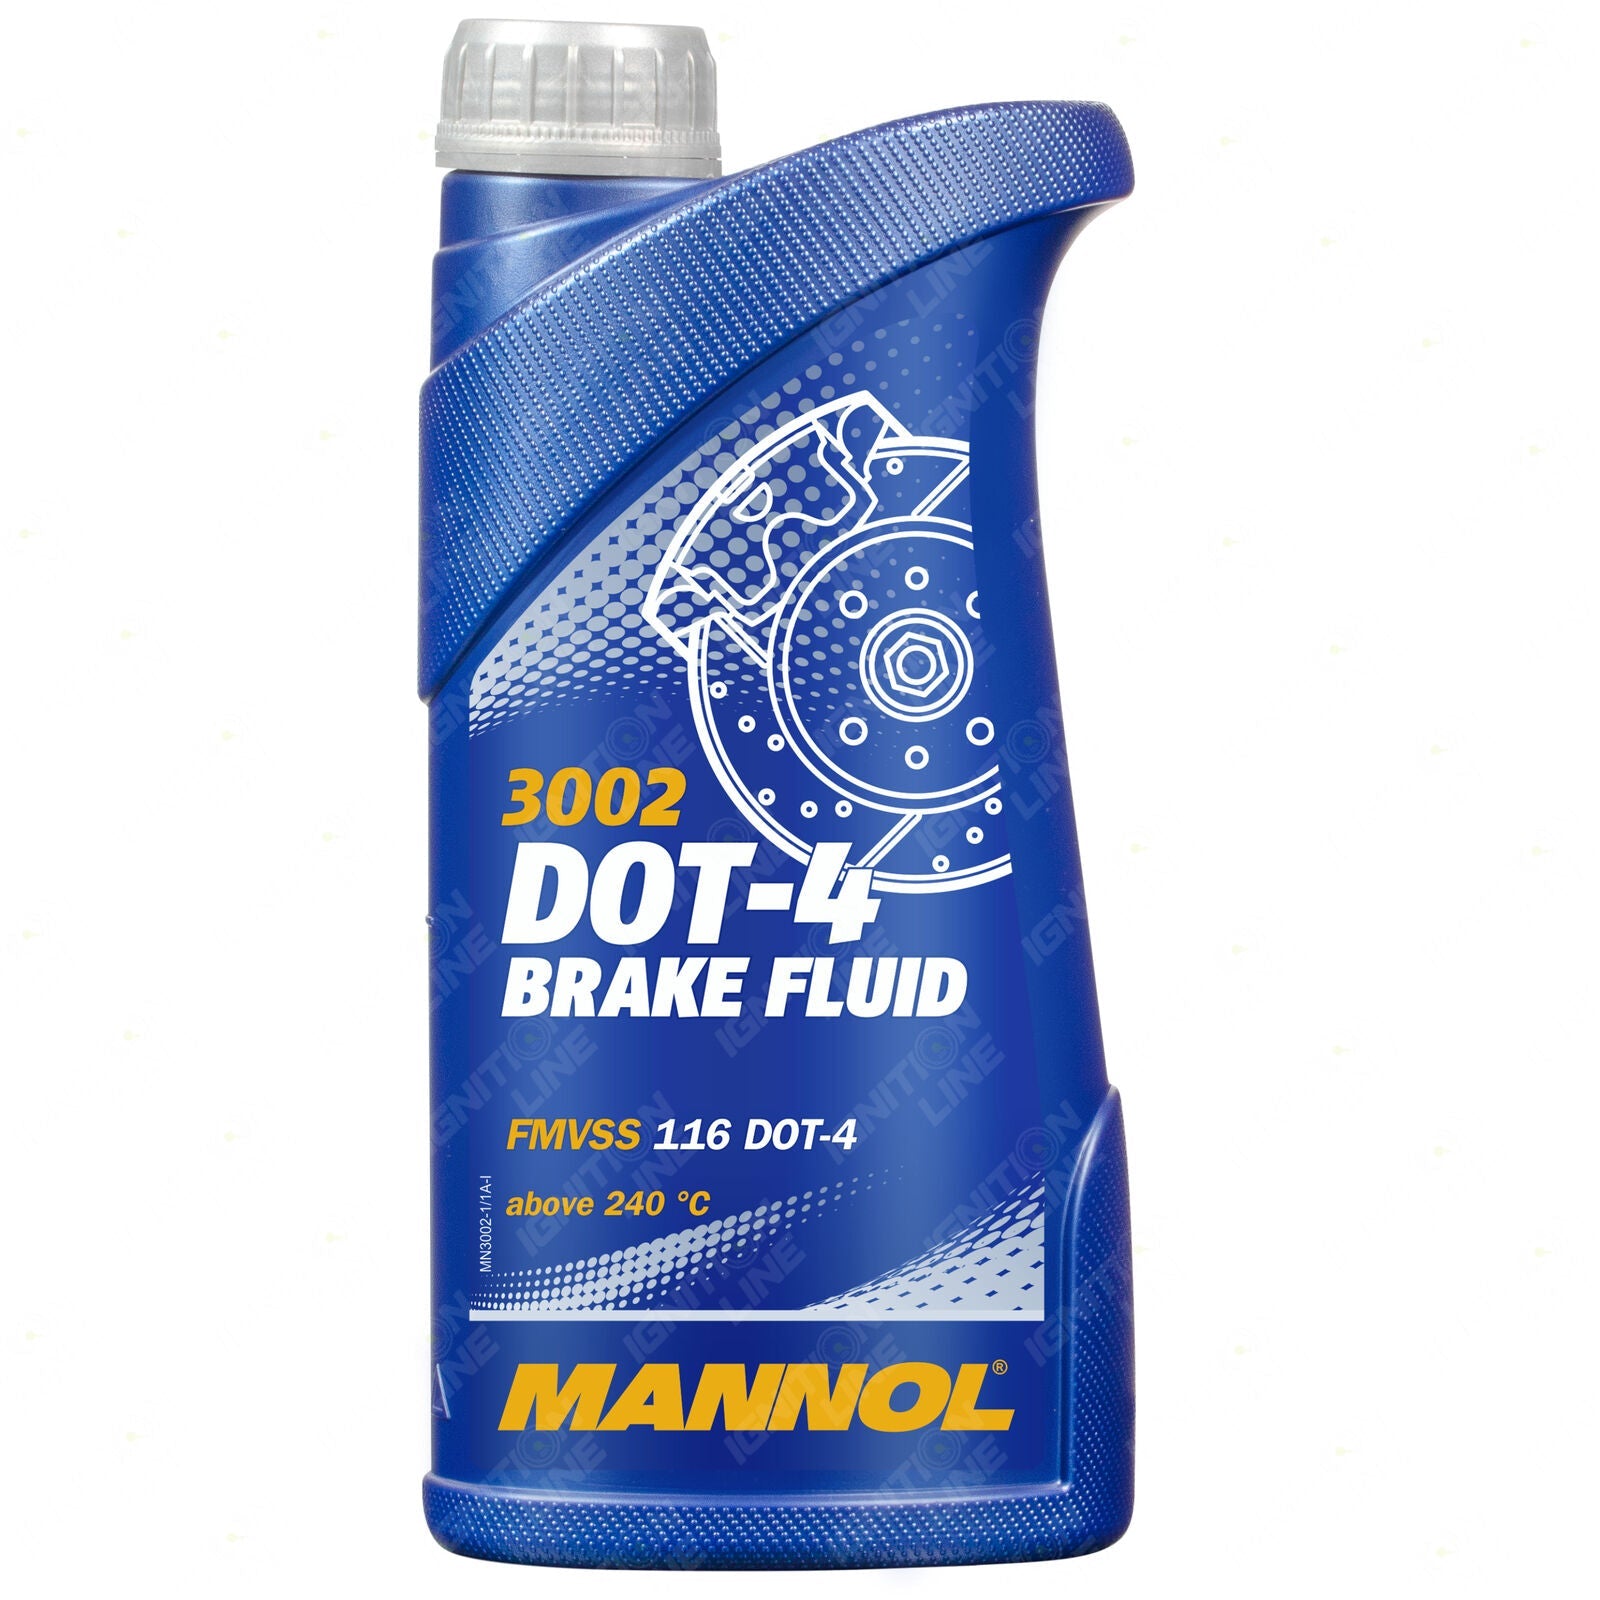 Mannol Brake Fluid Dot-4 910G